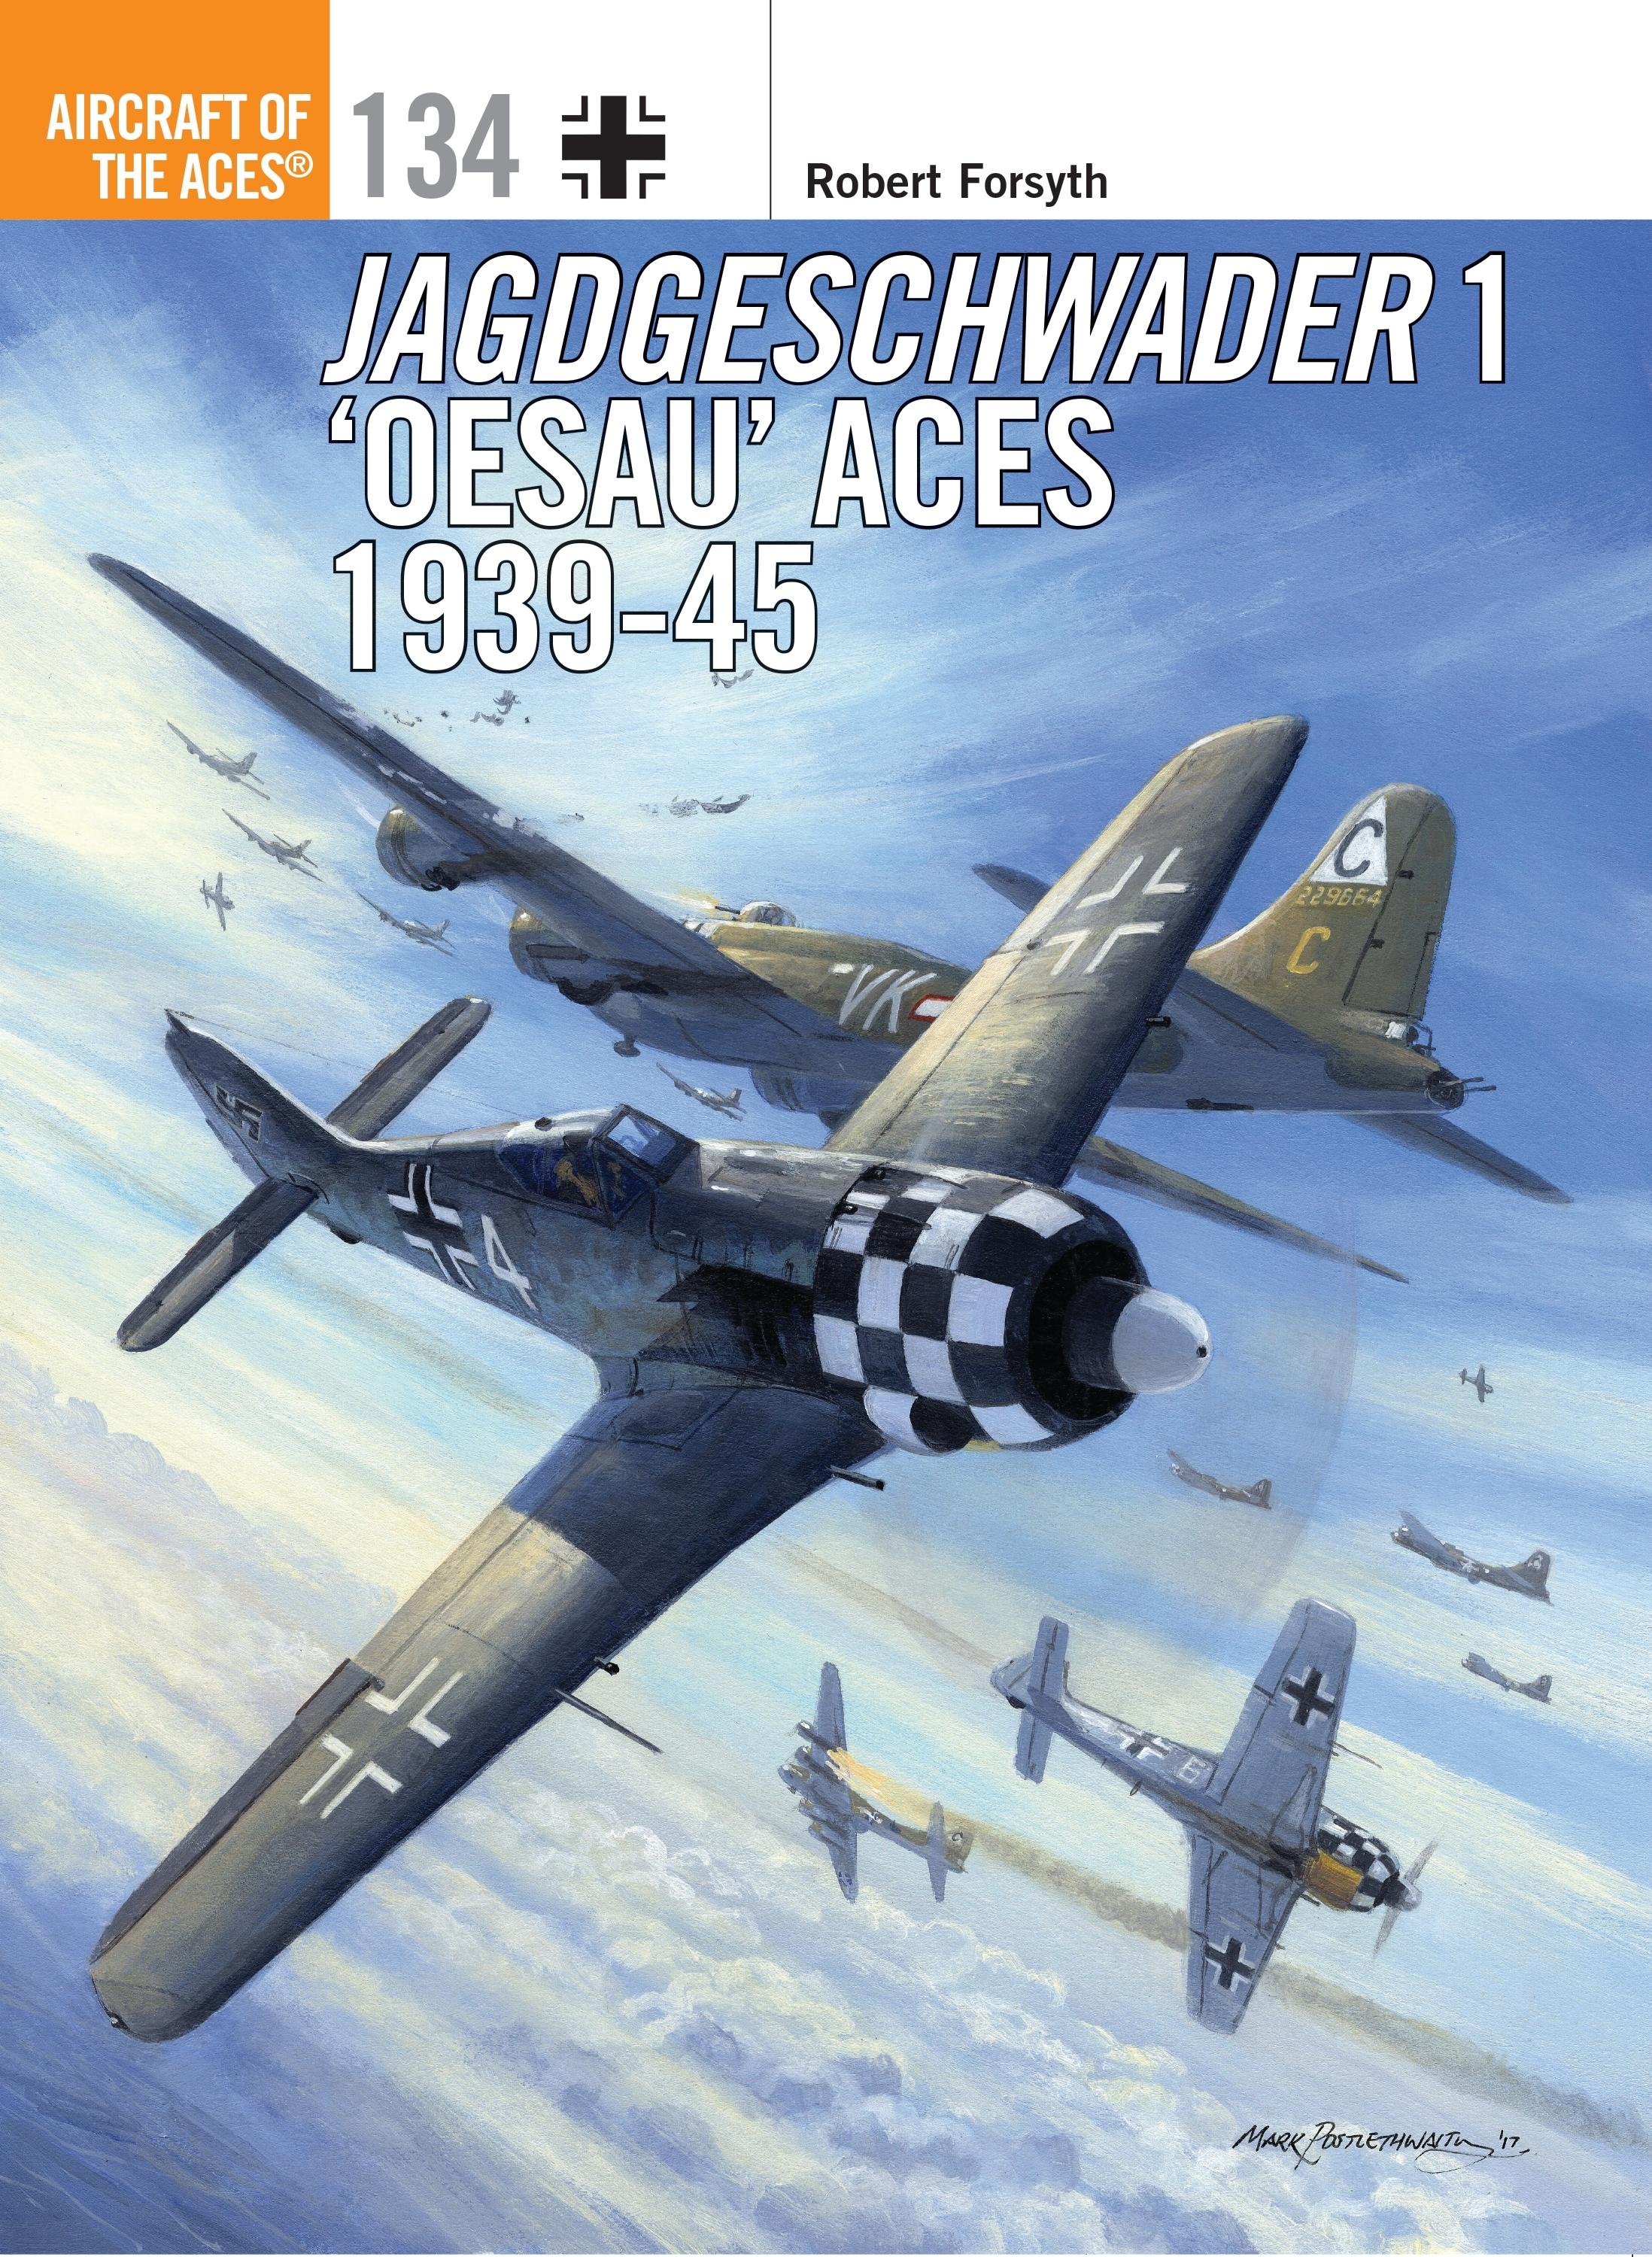 Jagdgeschwader 1 'oesau' Aces 1939-45 / Robert Forsyth / Taschenbuch / Aircraft of the Aces (Osprey) / Kartoniert / Broschiert / Englisch / 2017 / Bloomsbury USA / EAN 9781472822918 - Forsyth, Robert